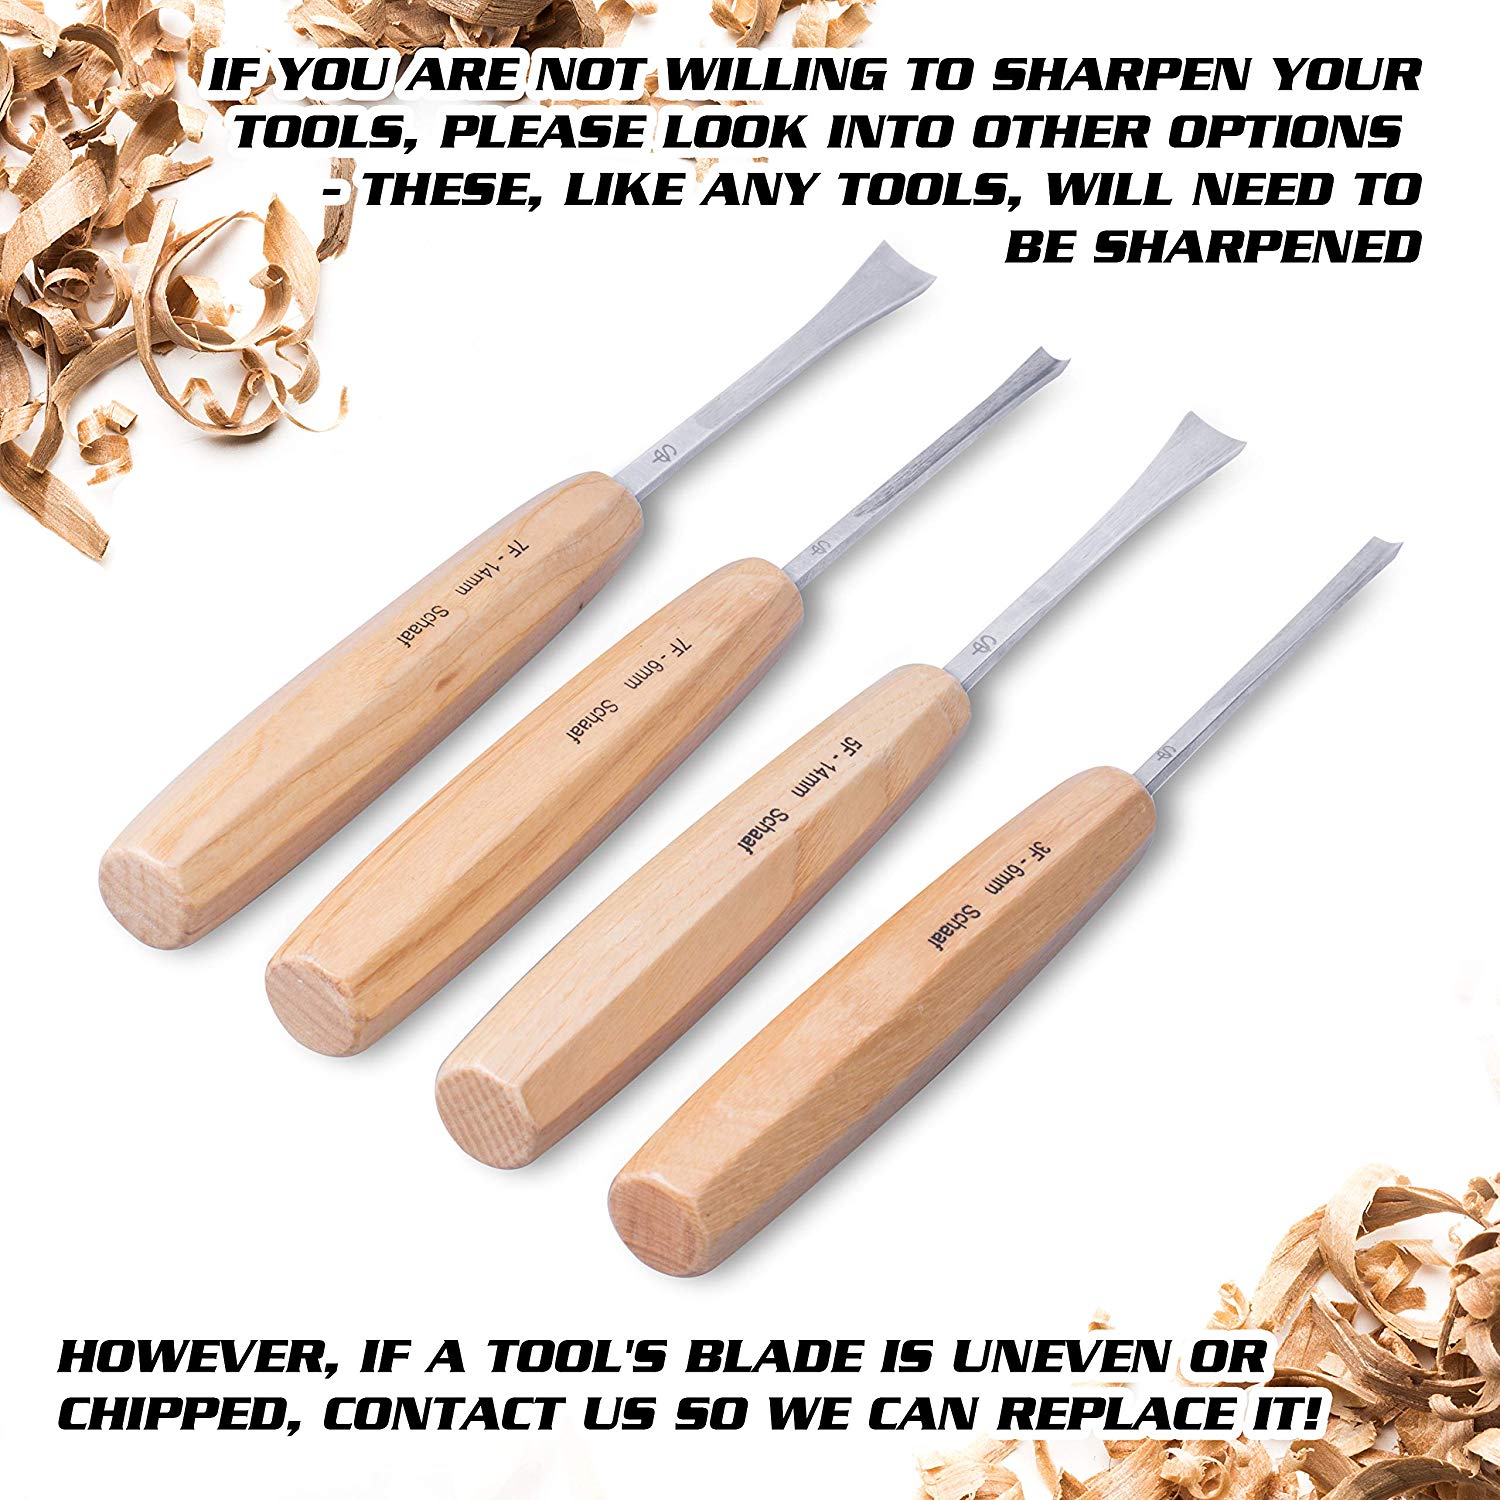 Wood carving tool replacement guarantee Schaaf Tools